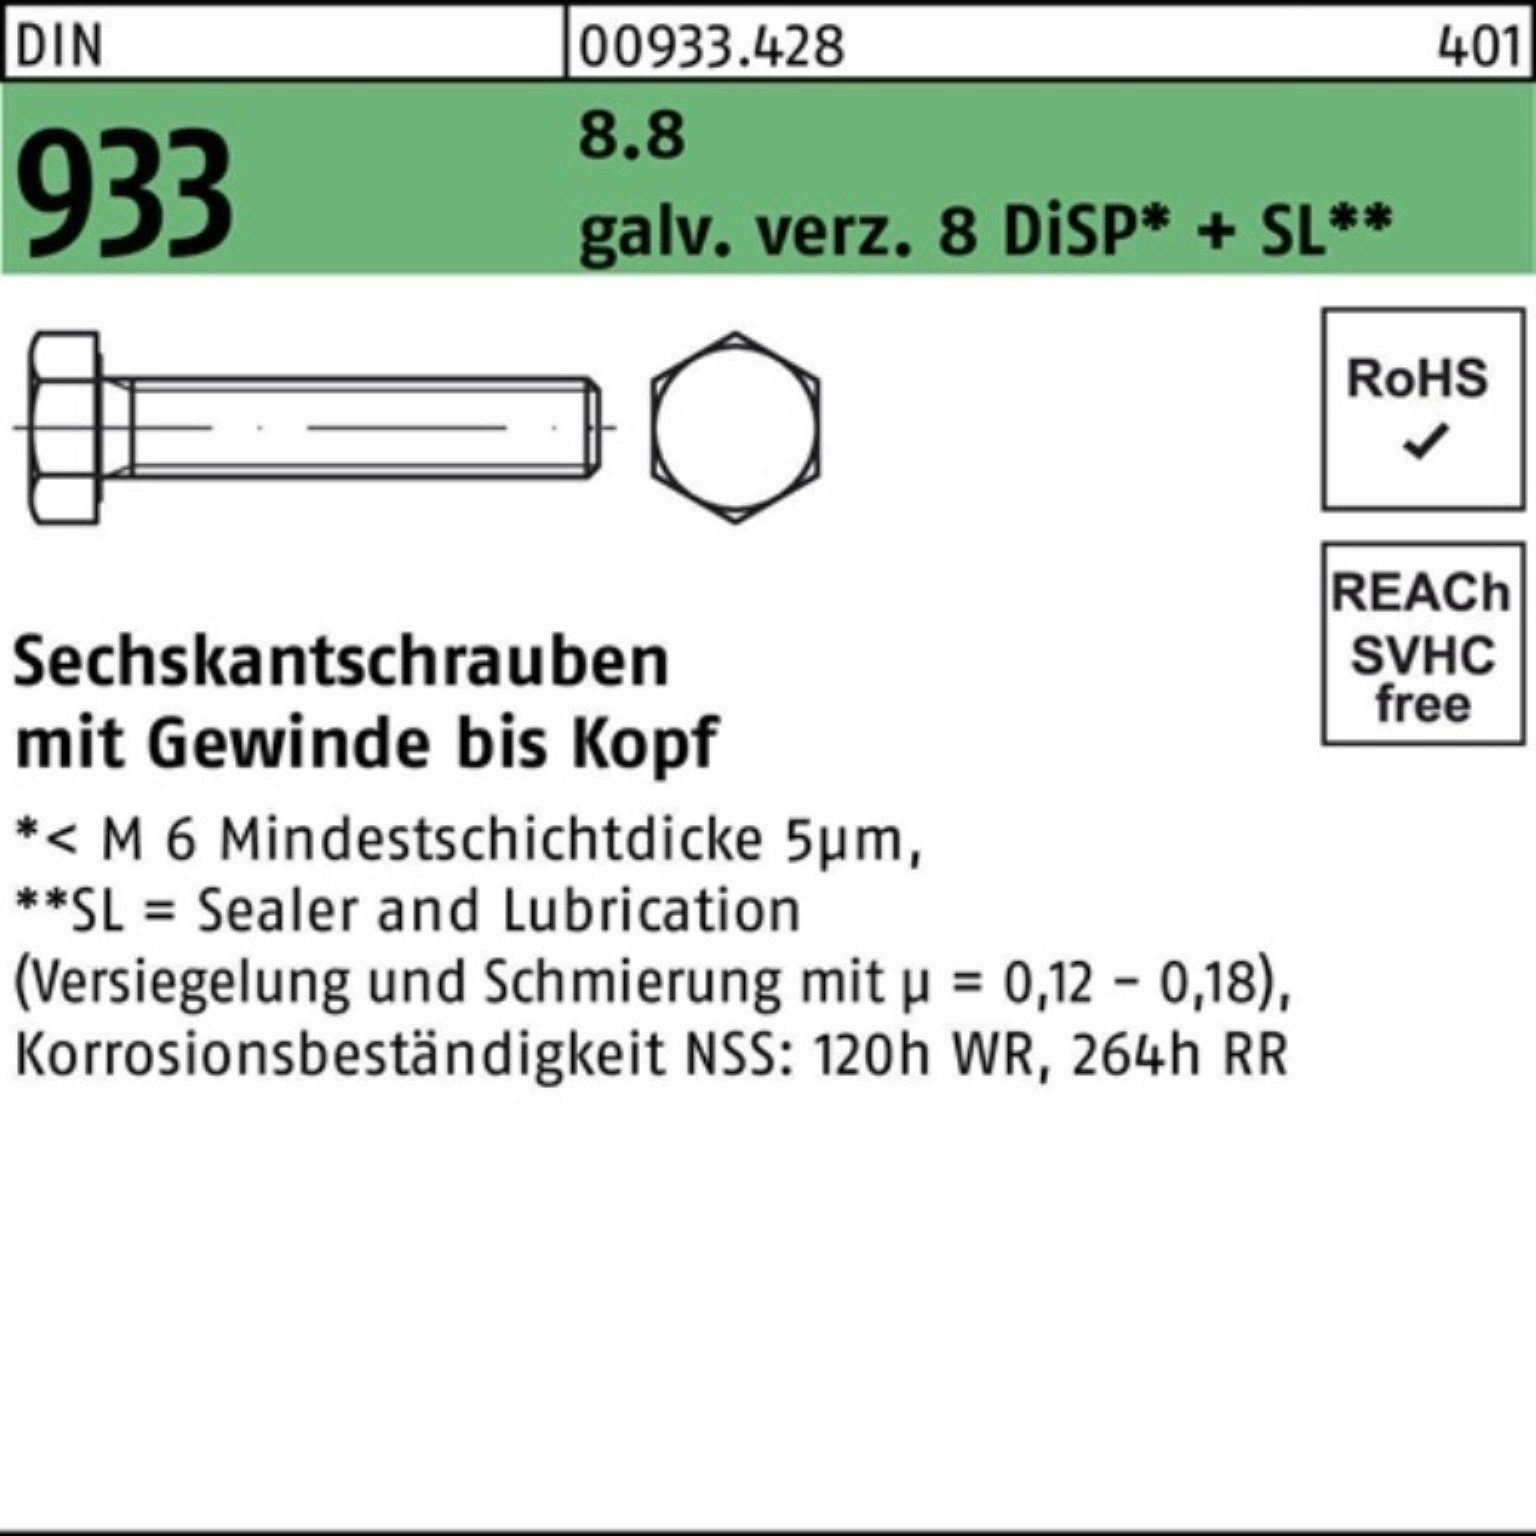 Reyher Sechskantschraube 100er Pack Sechskantschraube DIN 933 VG M20x 45 8.8 gal Zn 8 DiSP + SL